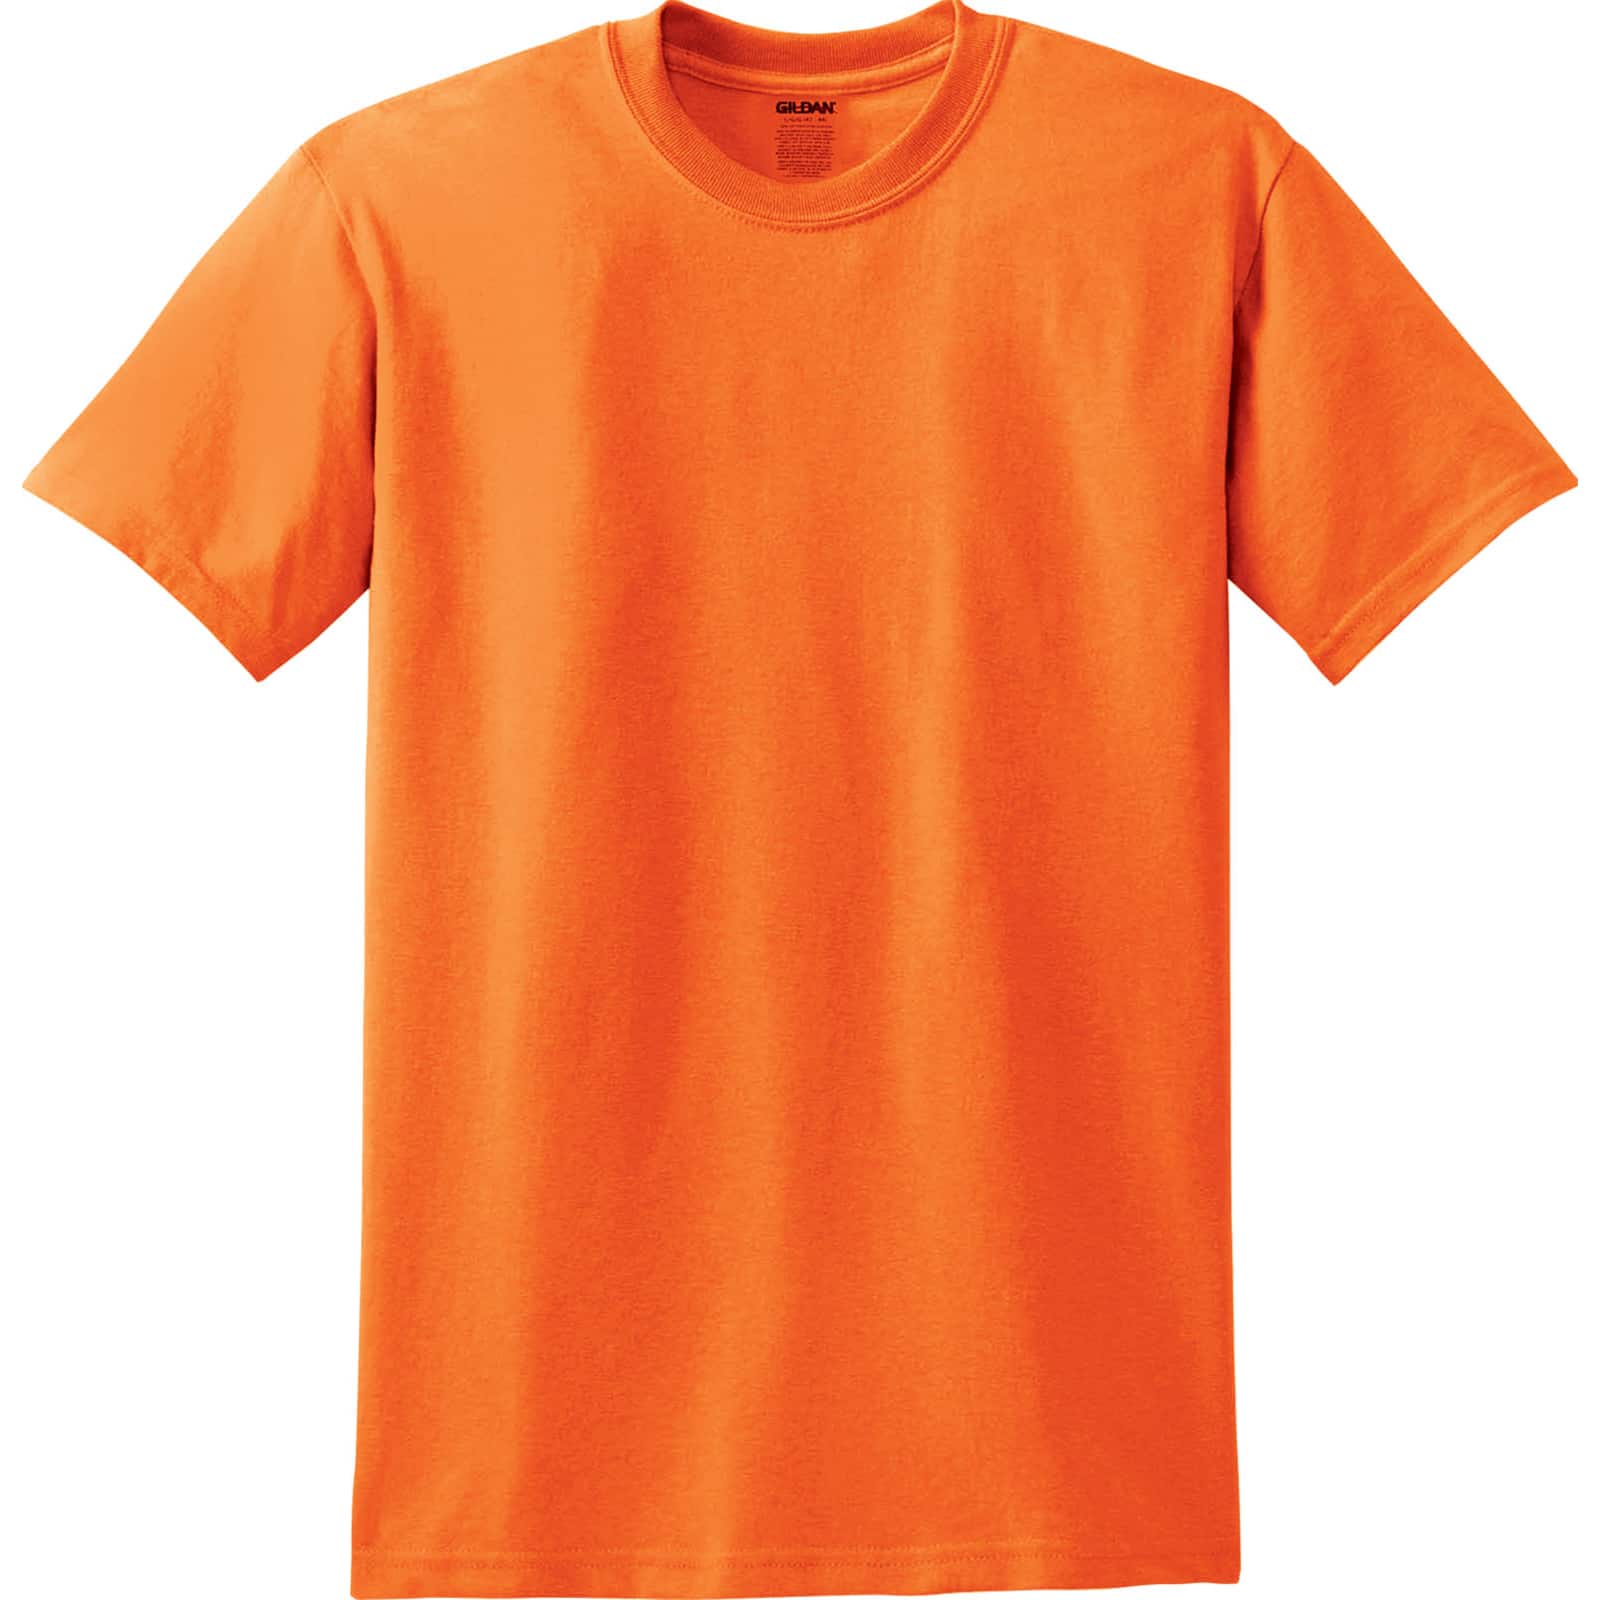 Gildan Camiseta para Hombre Pack de 5